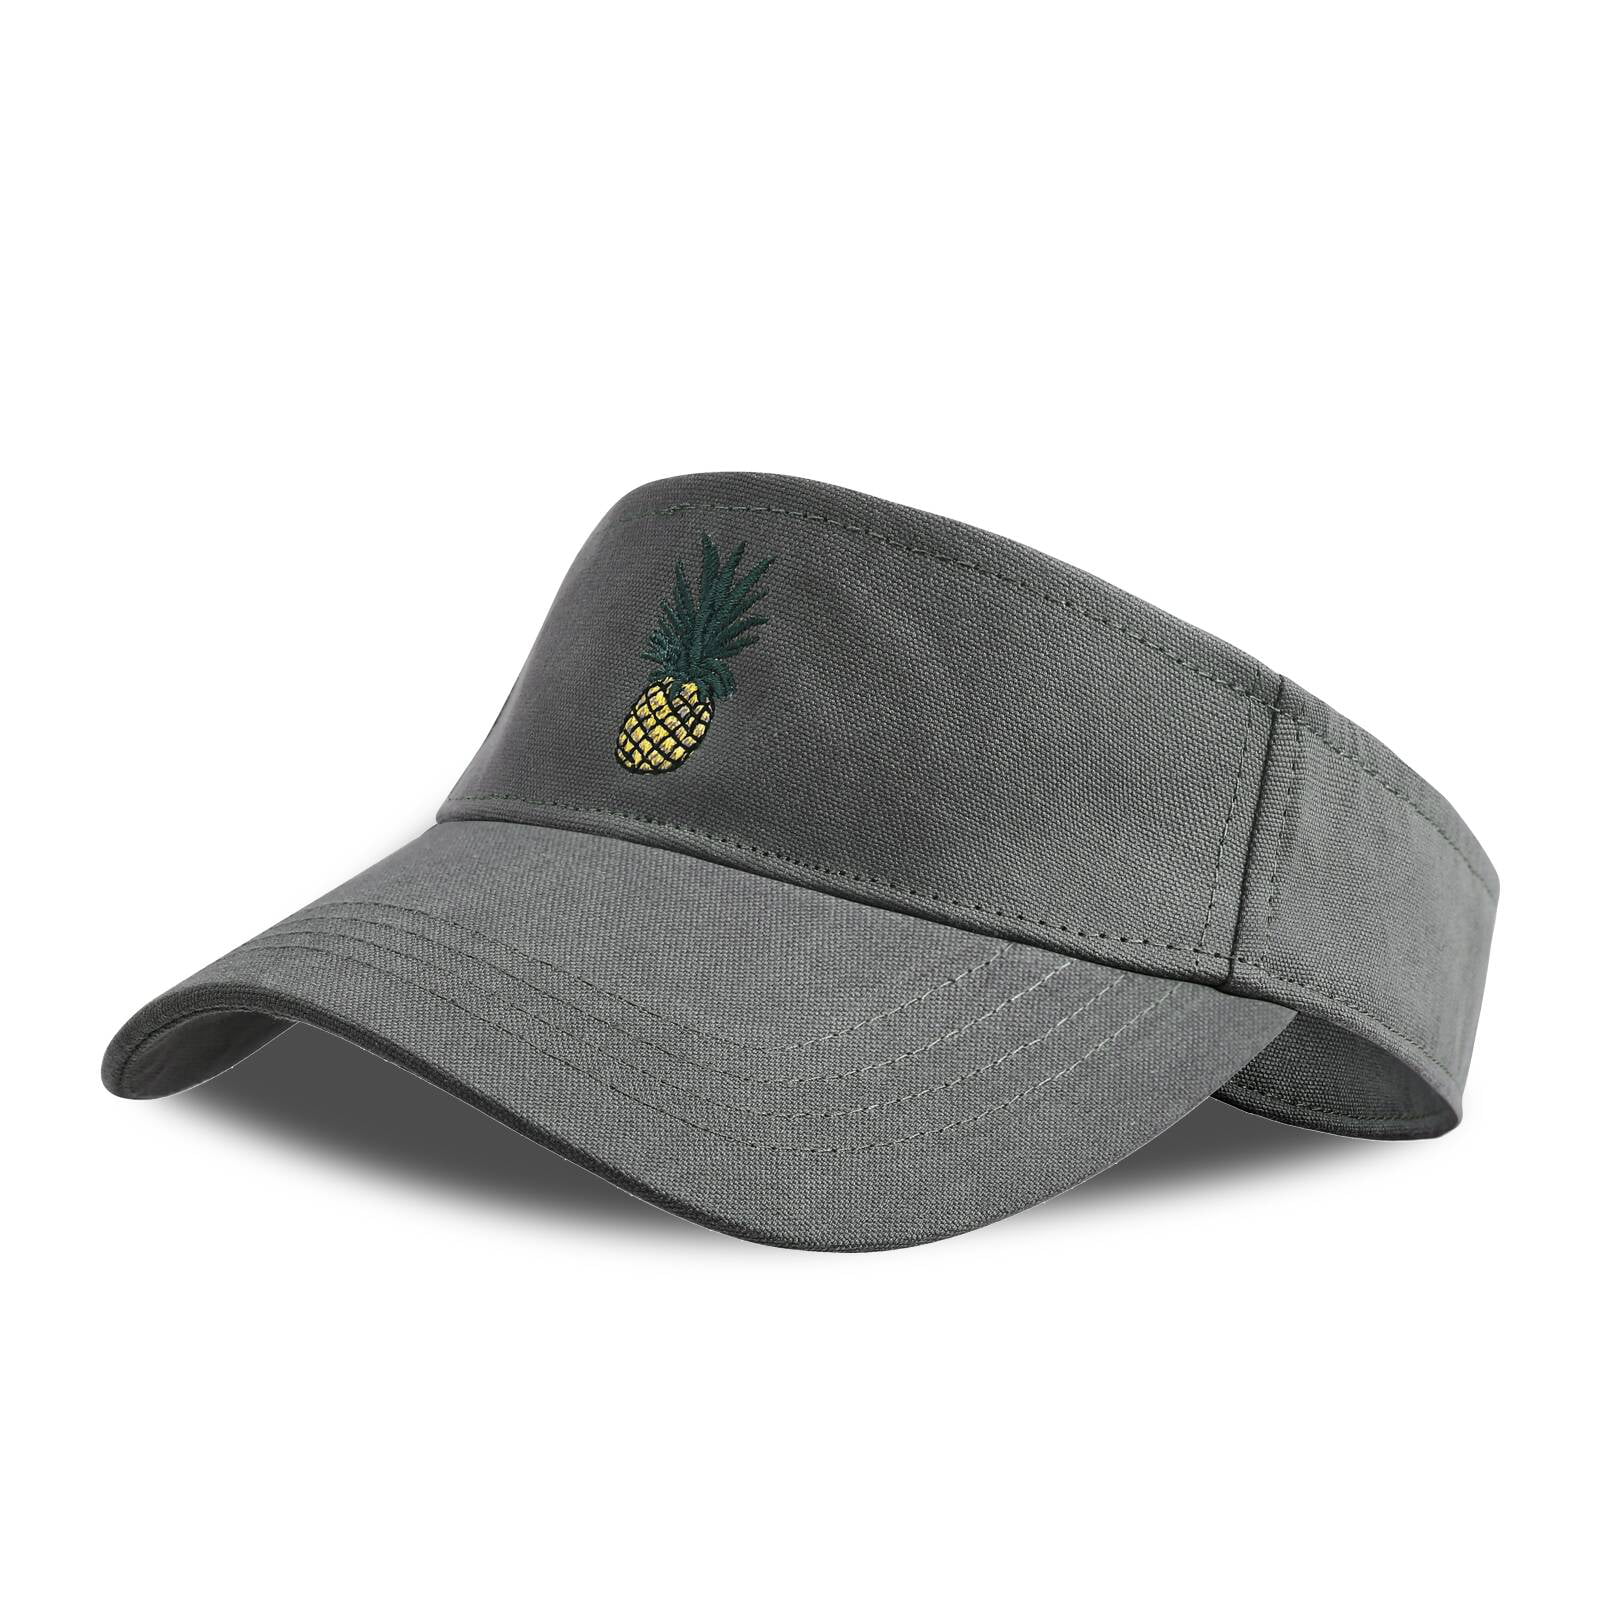 GuanGu Empty Top Hat Wide Brim SPF UV Protection Adjustable Sports Visor  for Men and Women